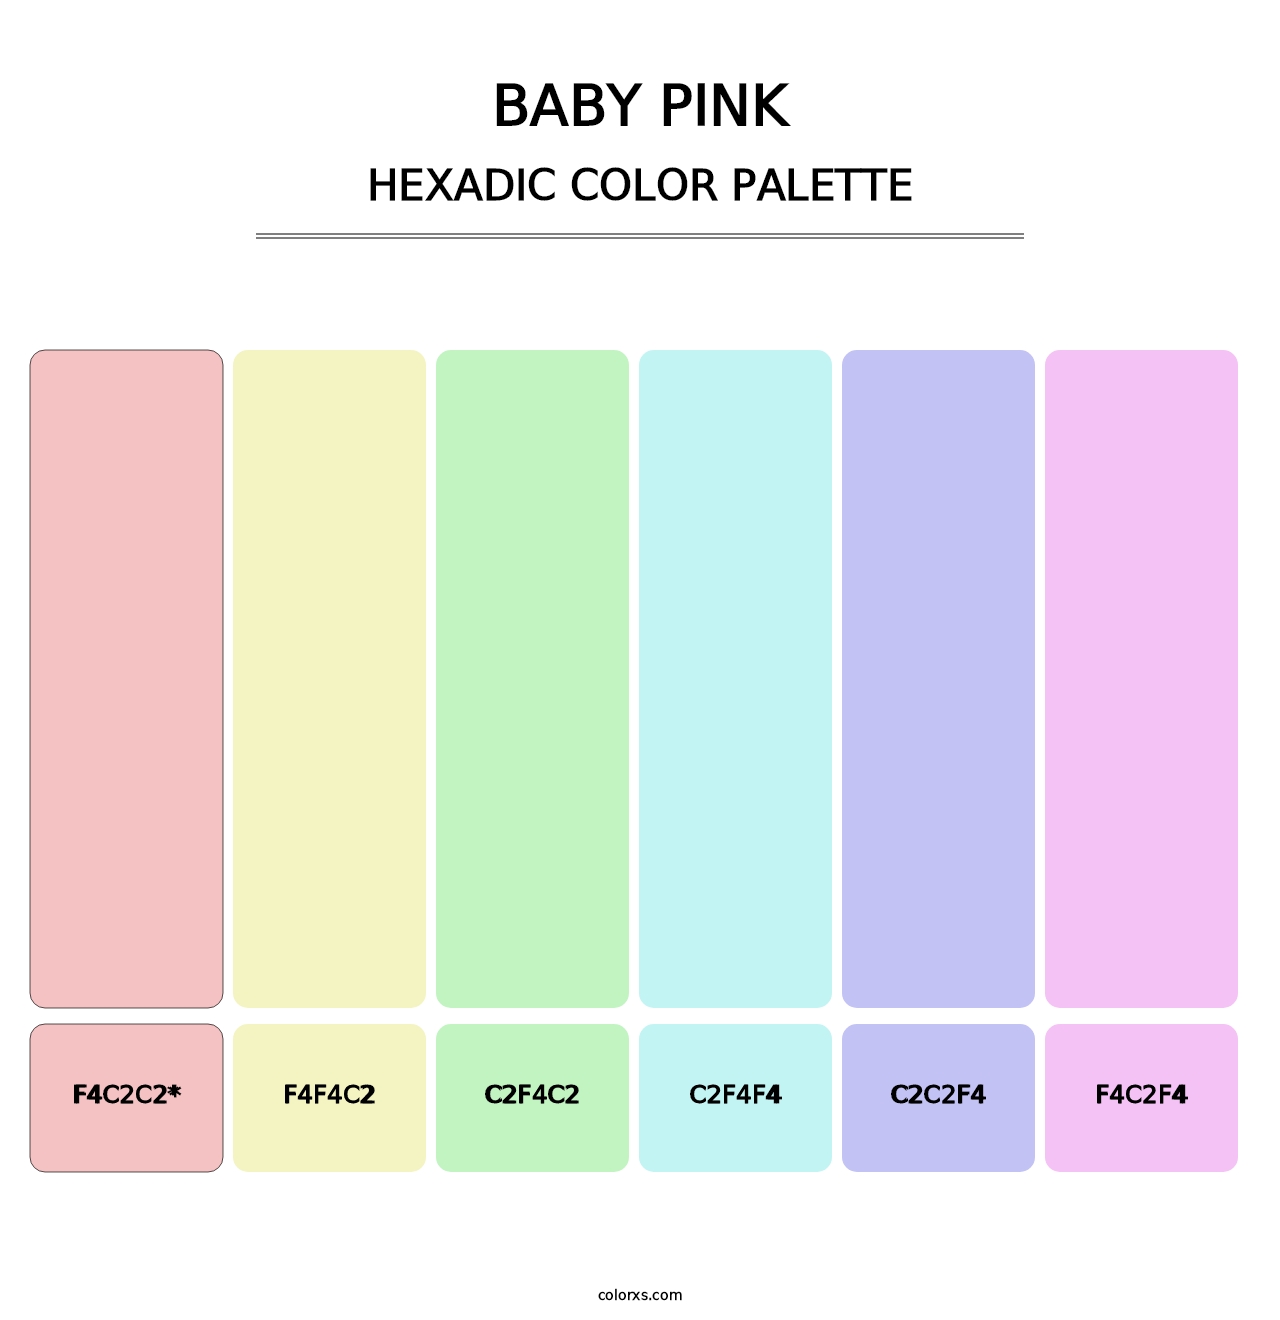 Baby Pink - Hexadic Color Palette